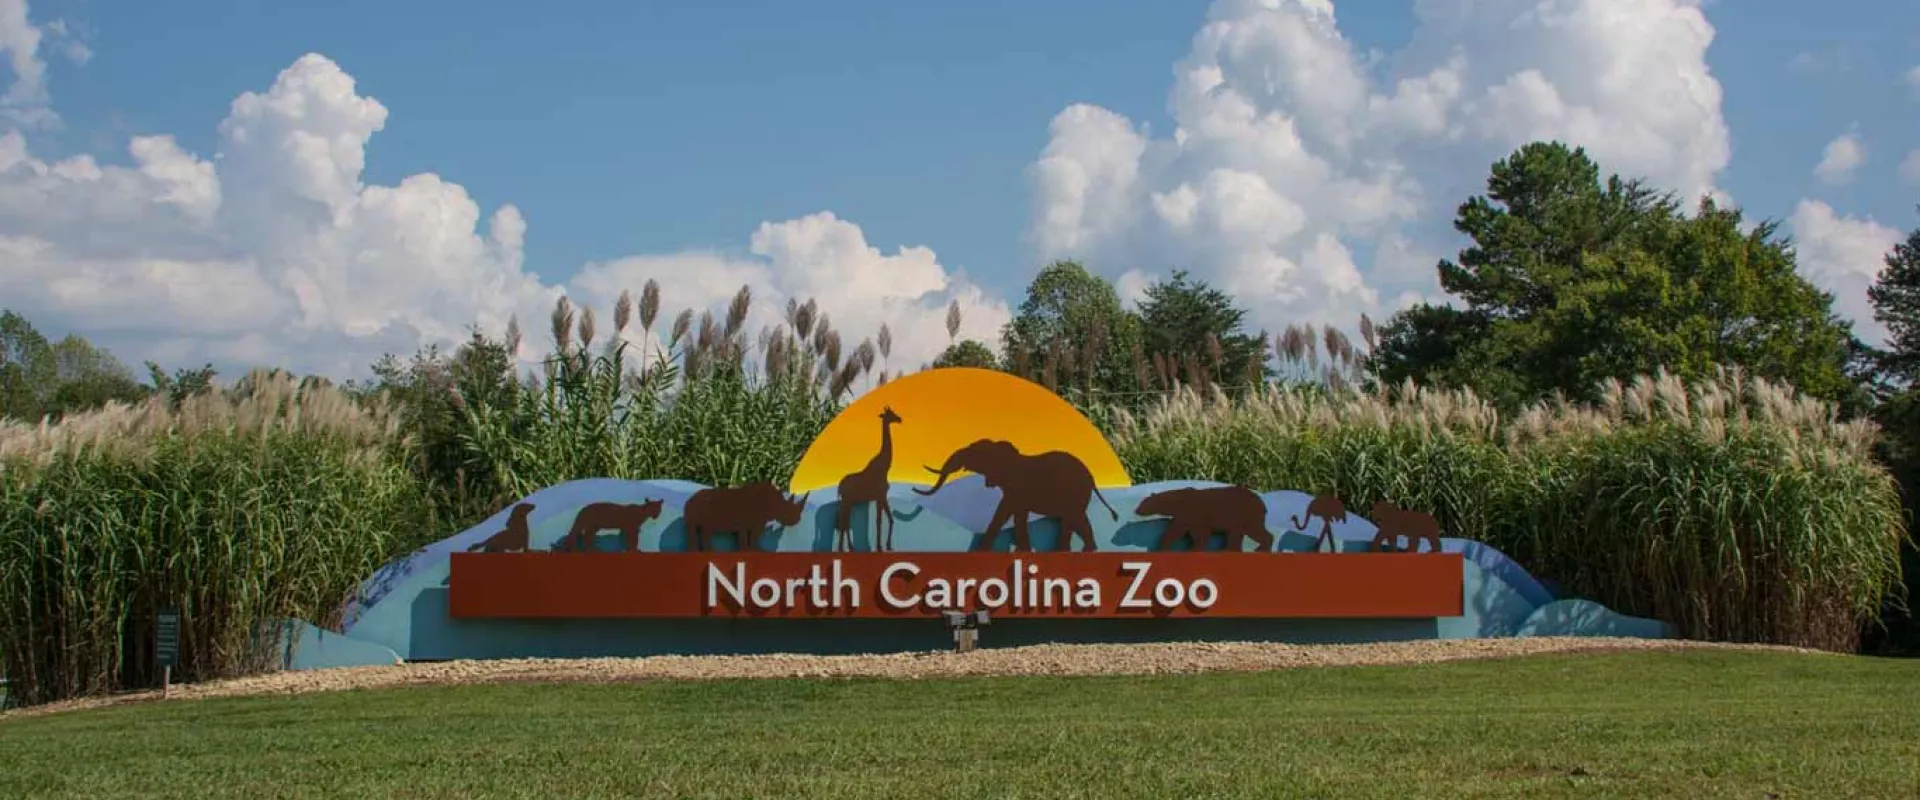 The North Carolina Zoo is Certified Sensory Inclusive Through KultureCity 